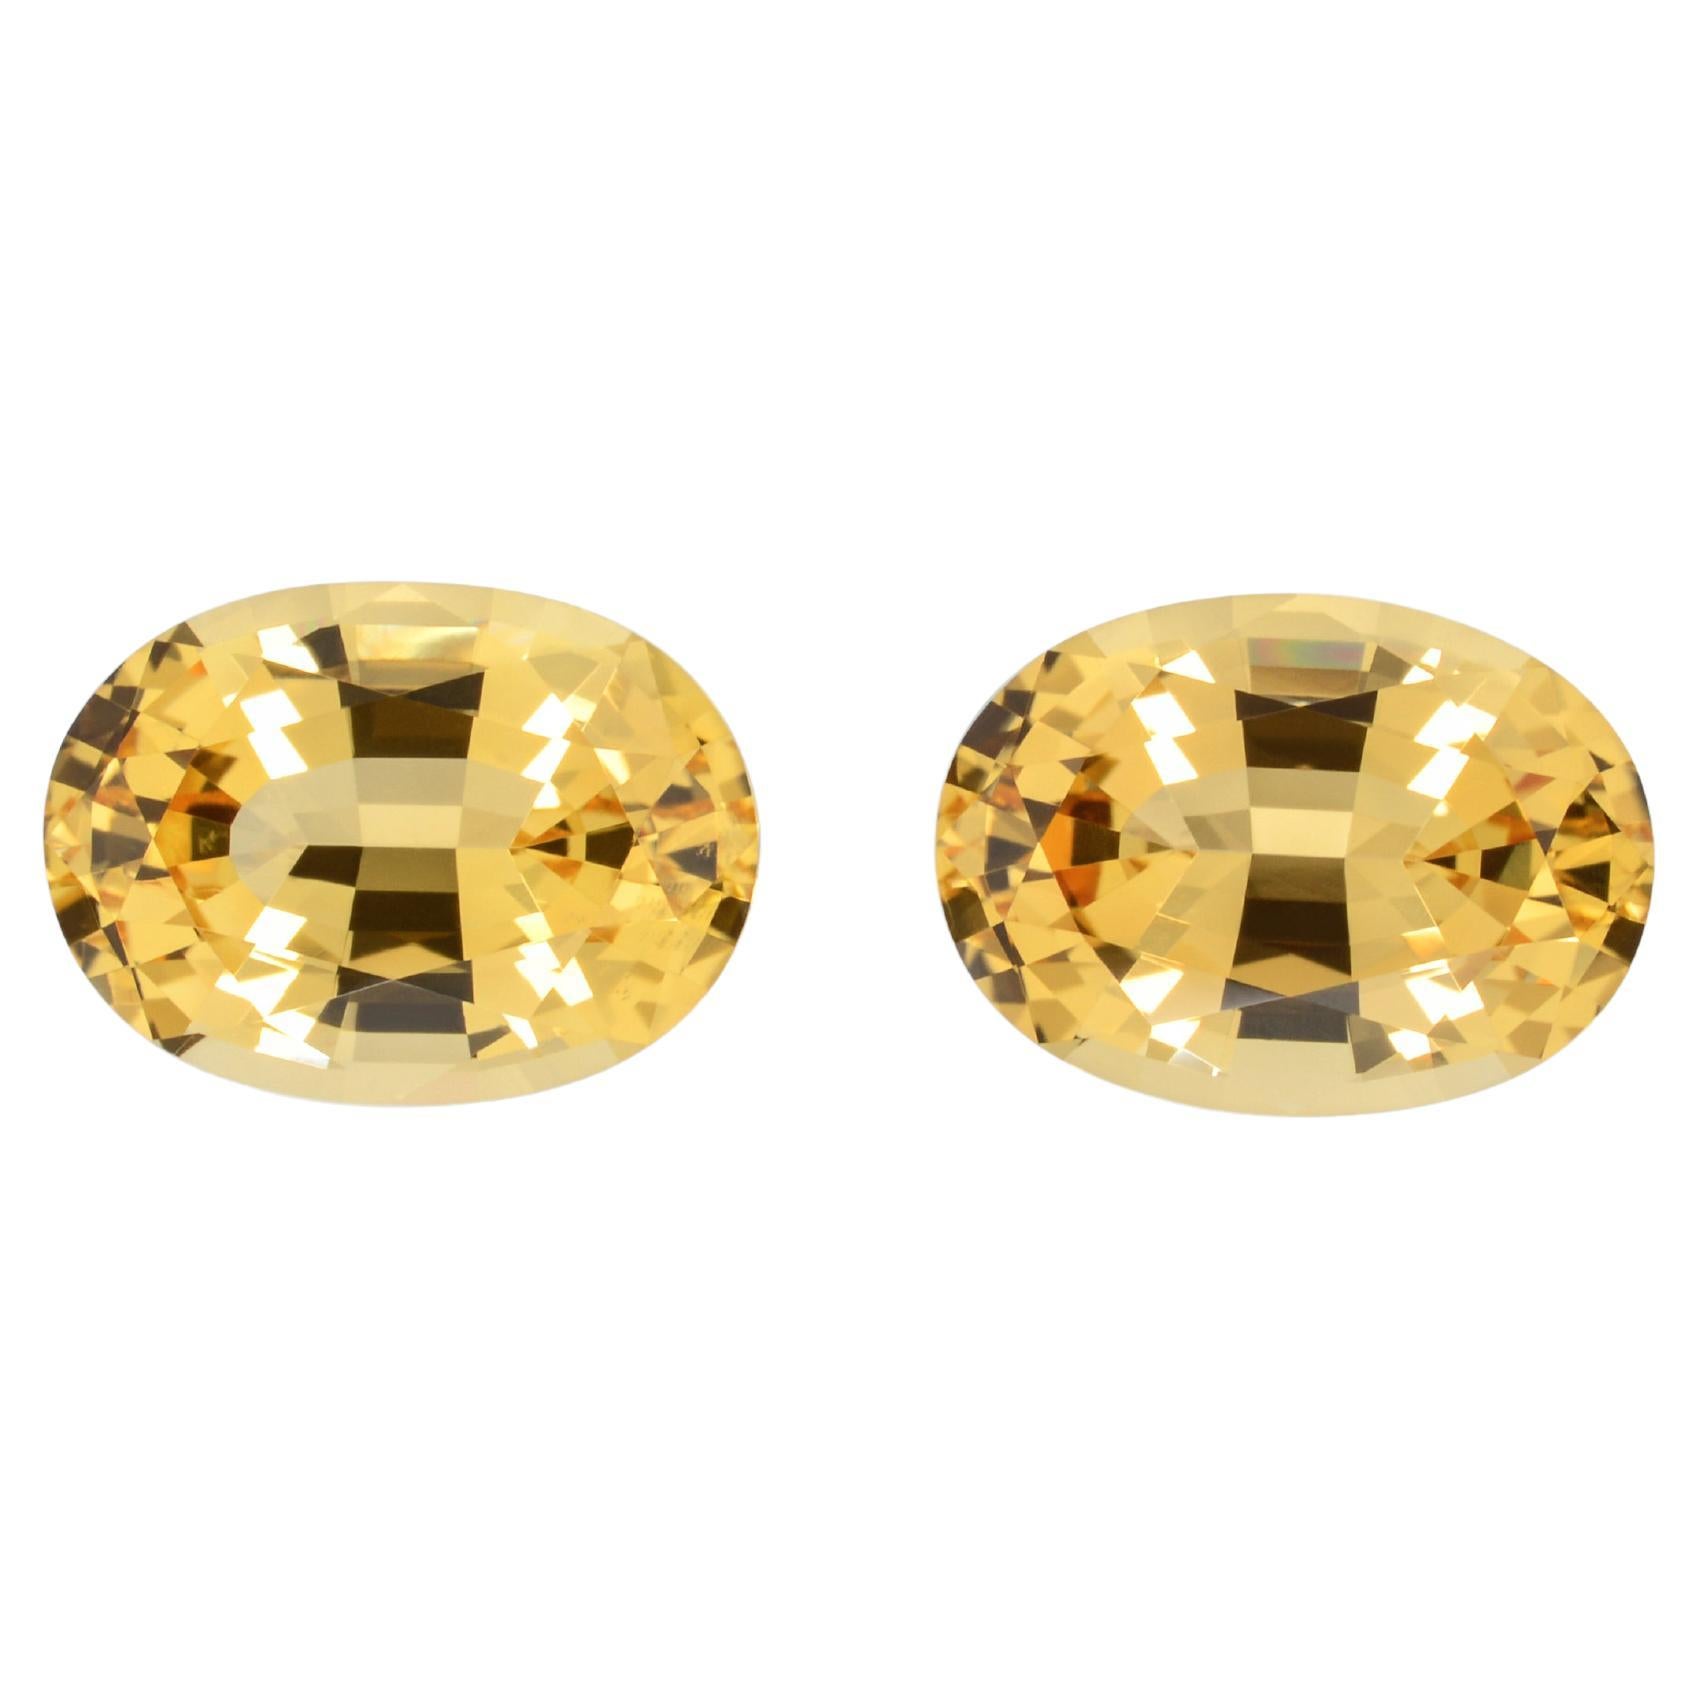 Imperial Topaz Earring Gemstones 8.26 Carats Oval Brazilian Loose Gems For Sale